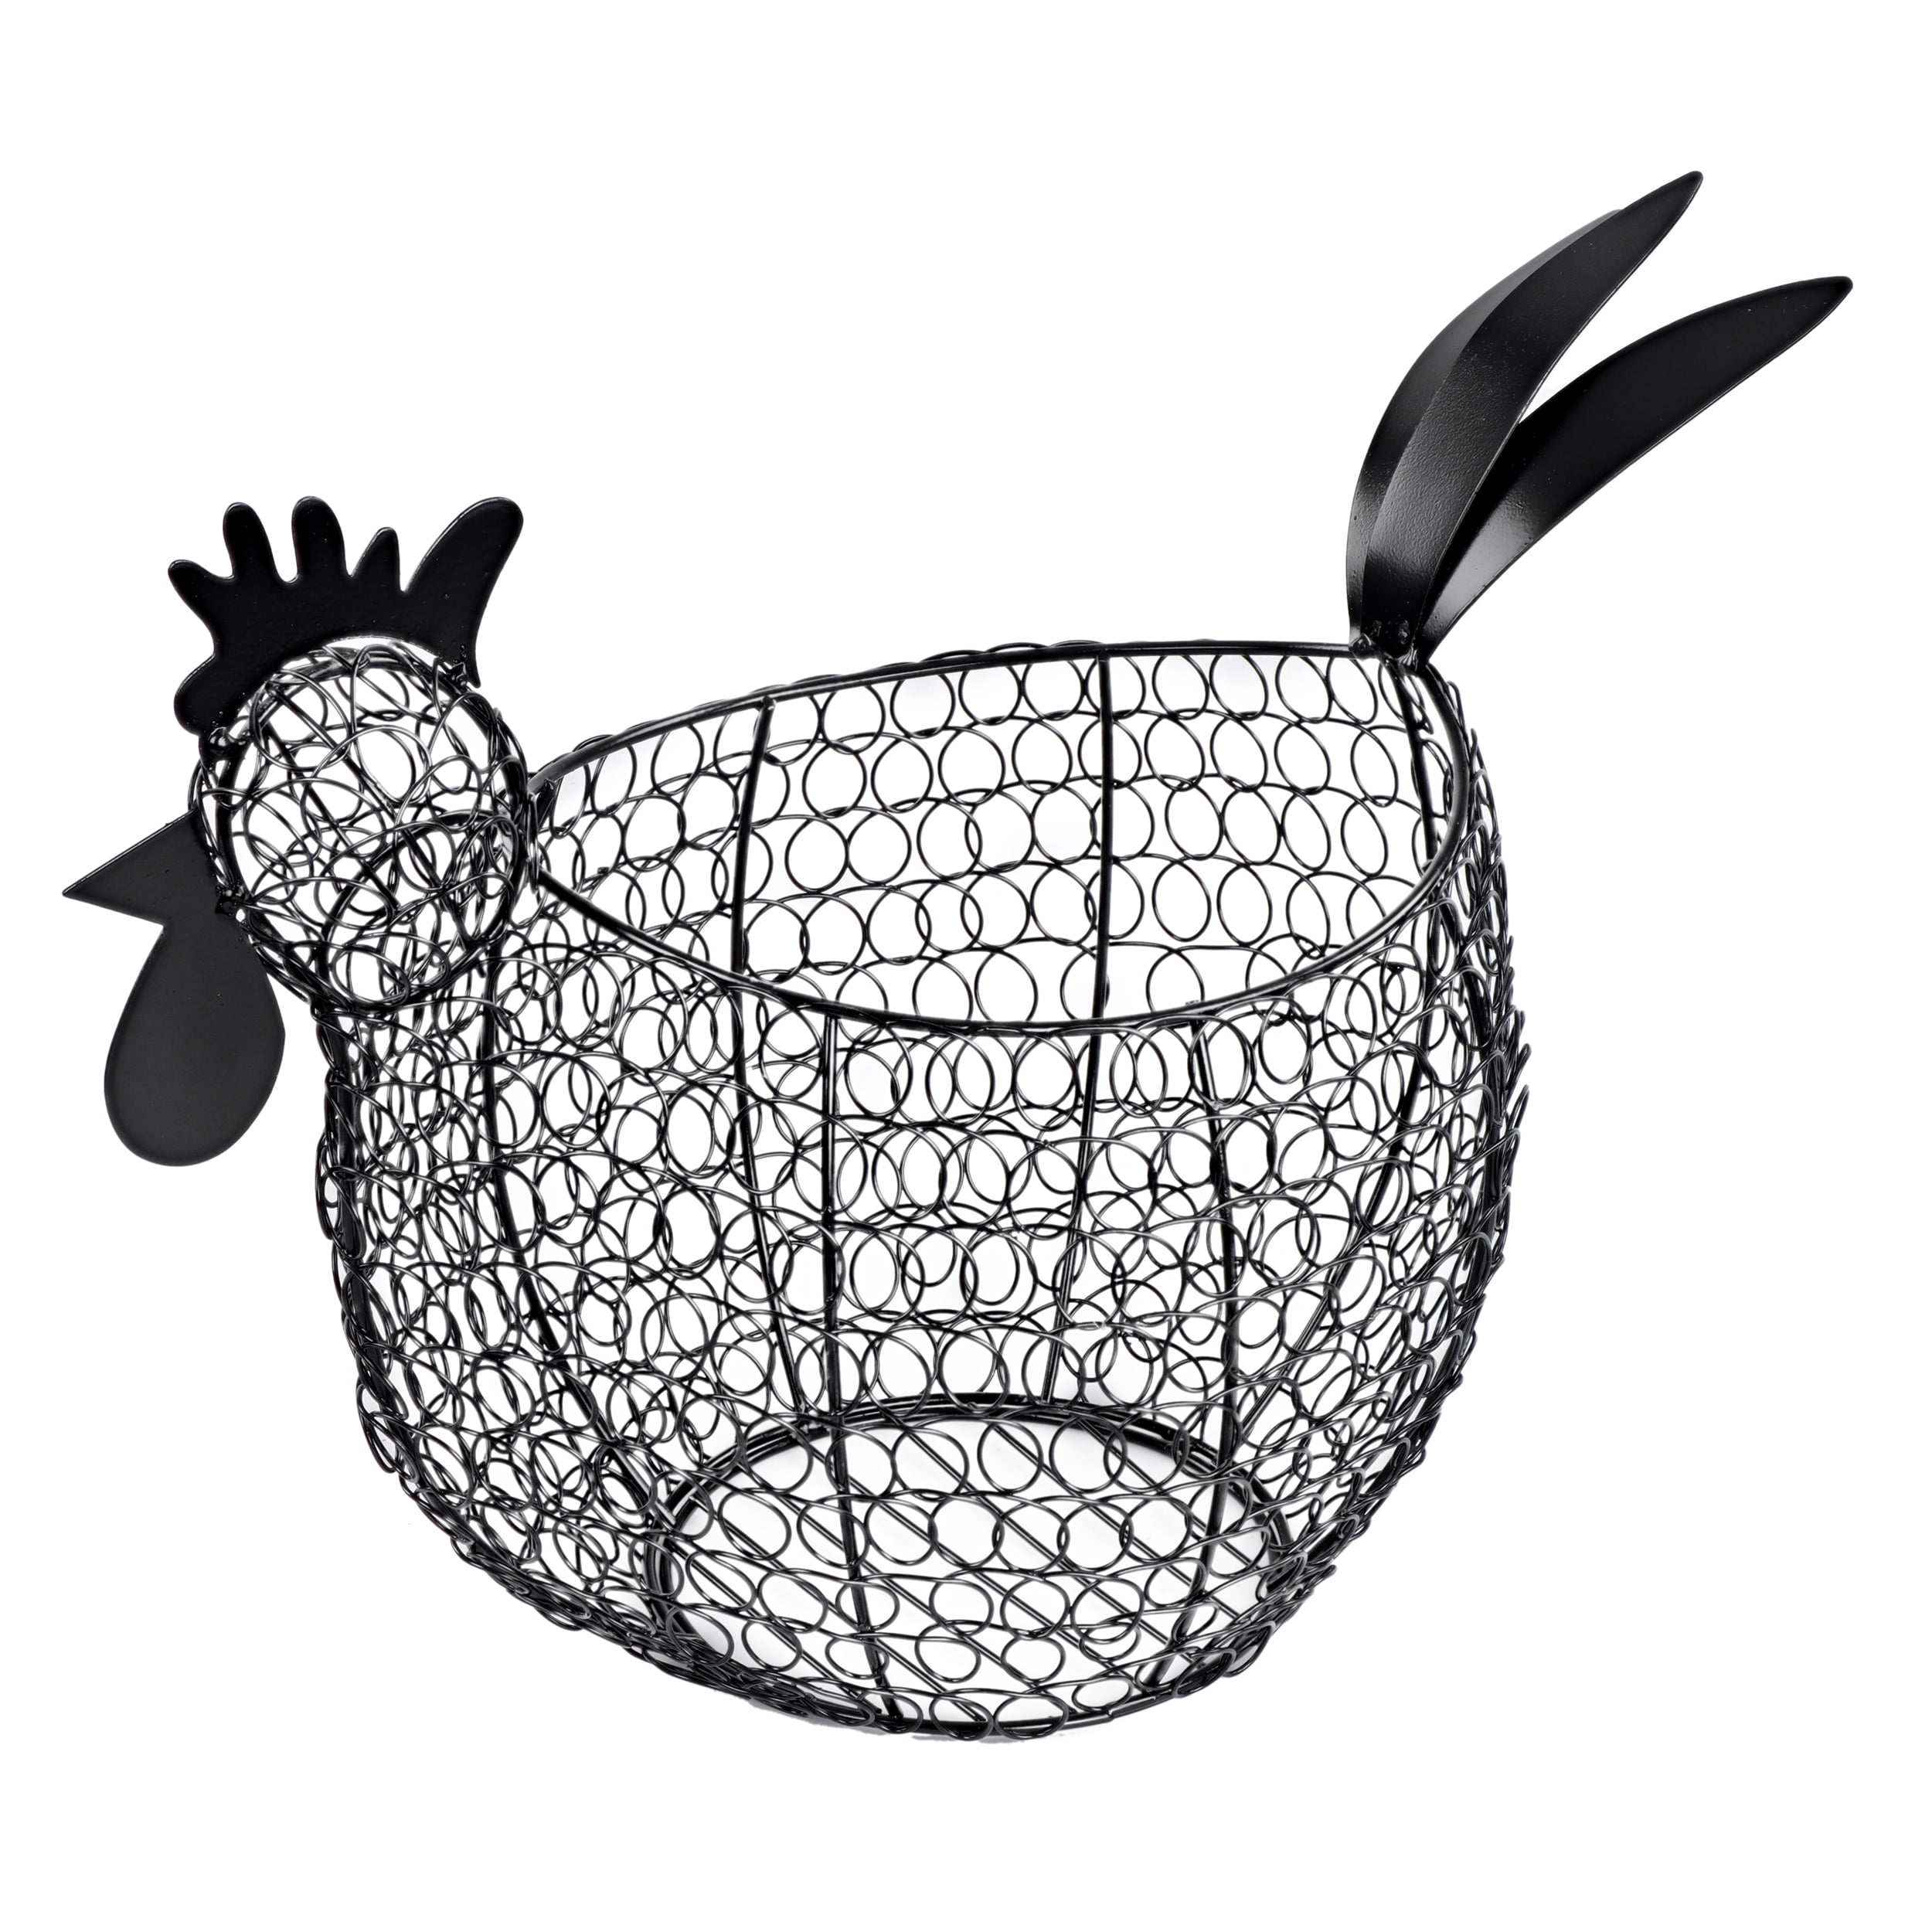 Kitchen Chicken Shape Egg Holder Stand Rack Storage Basket Holds Up To 18 Eggs 